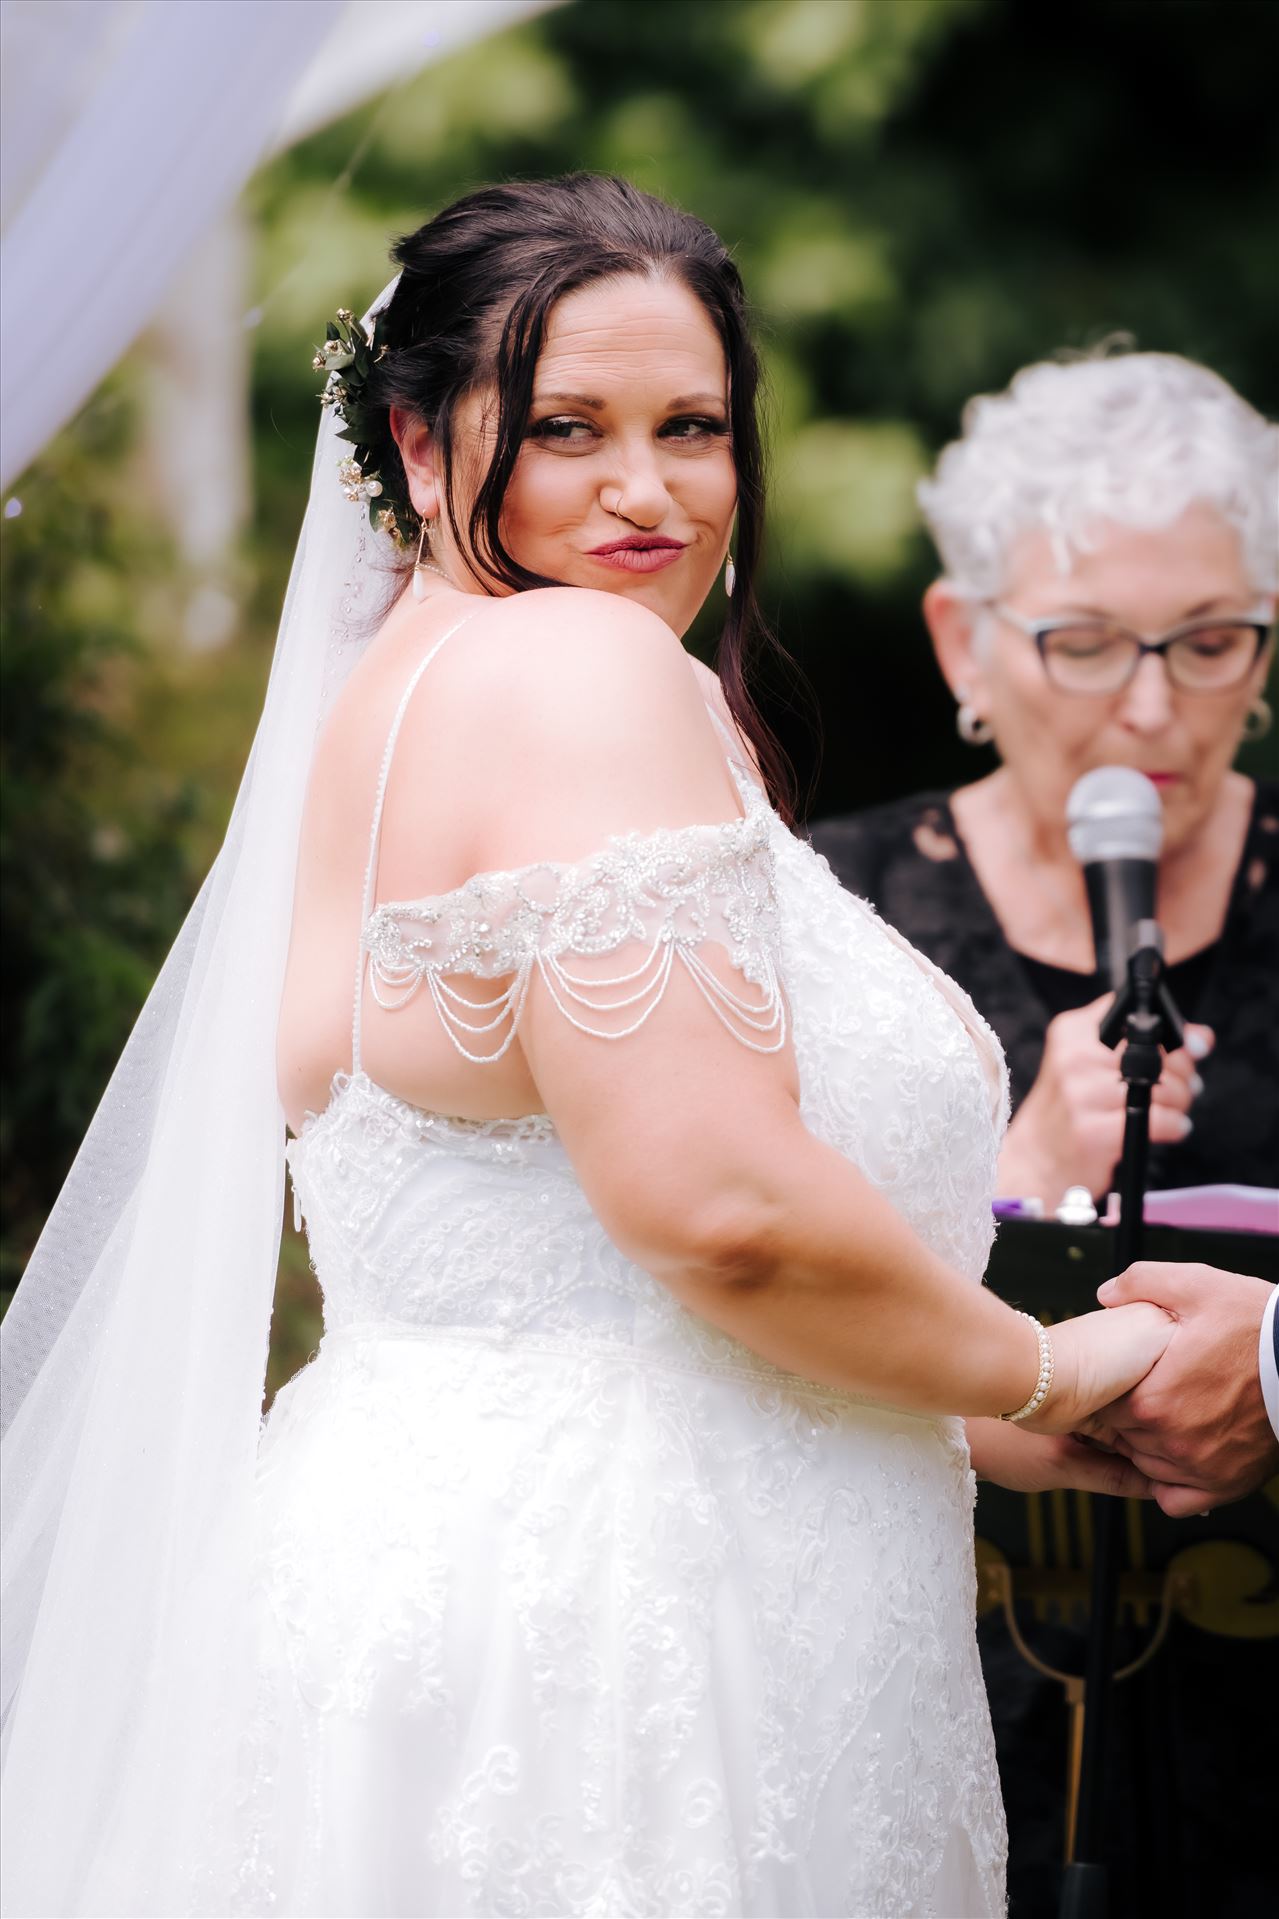 Sneak Peek-5415.JPG Mirror's Edge Wedding Photography, a San Luis Obispo and Santa Barbara County photographer capture the Nagy's Madonna Inn Wedding.  Madonna Inn Sassy Bride. by Sarah Williams